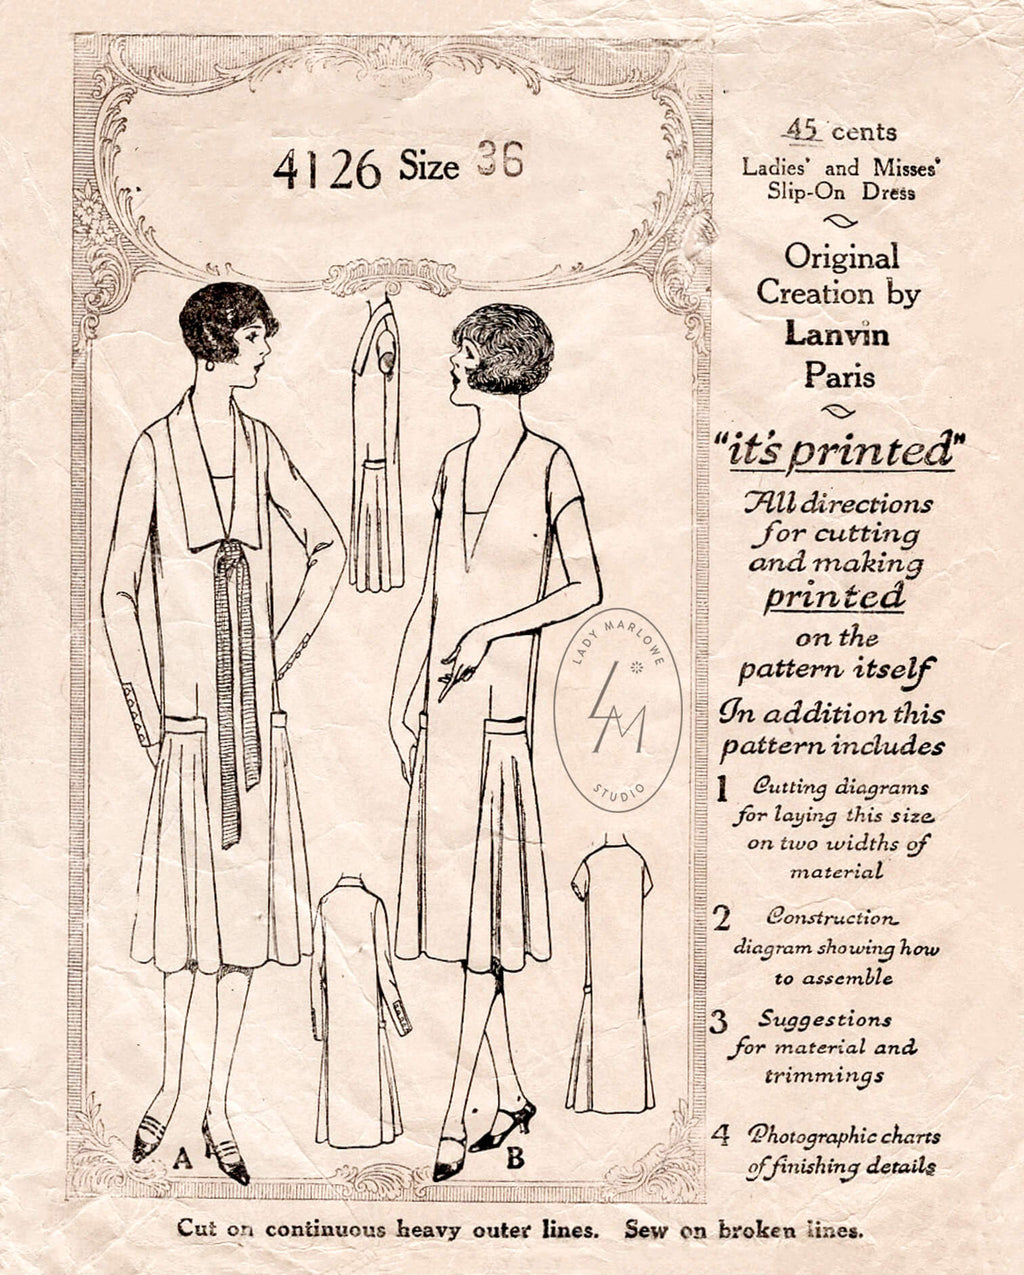 1920s 20s flapper era dress McCall 4126 drop waist flounce skirt insets chelsea collar vintage sewing pattern reproduction